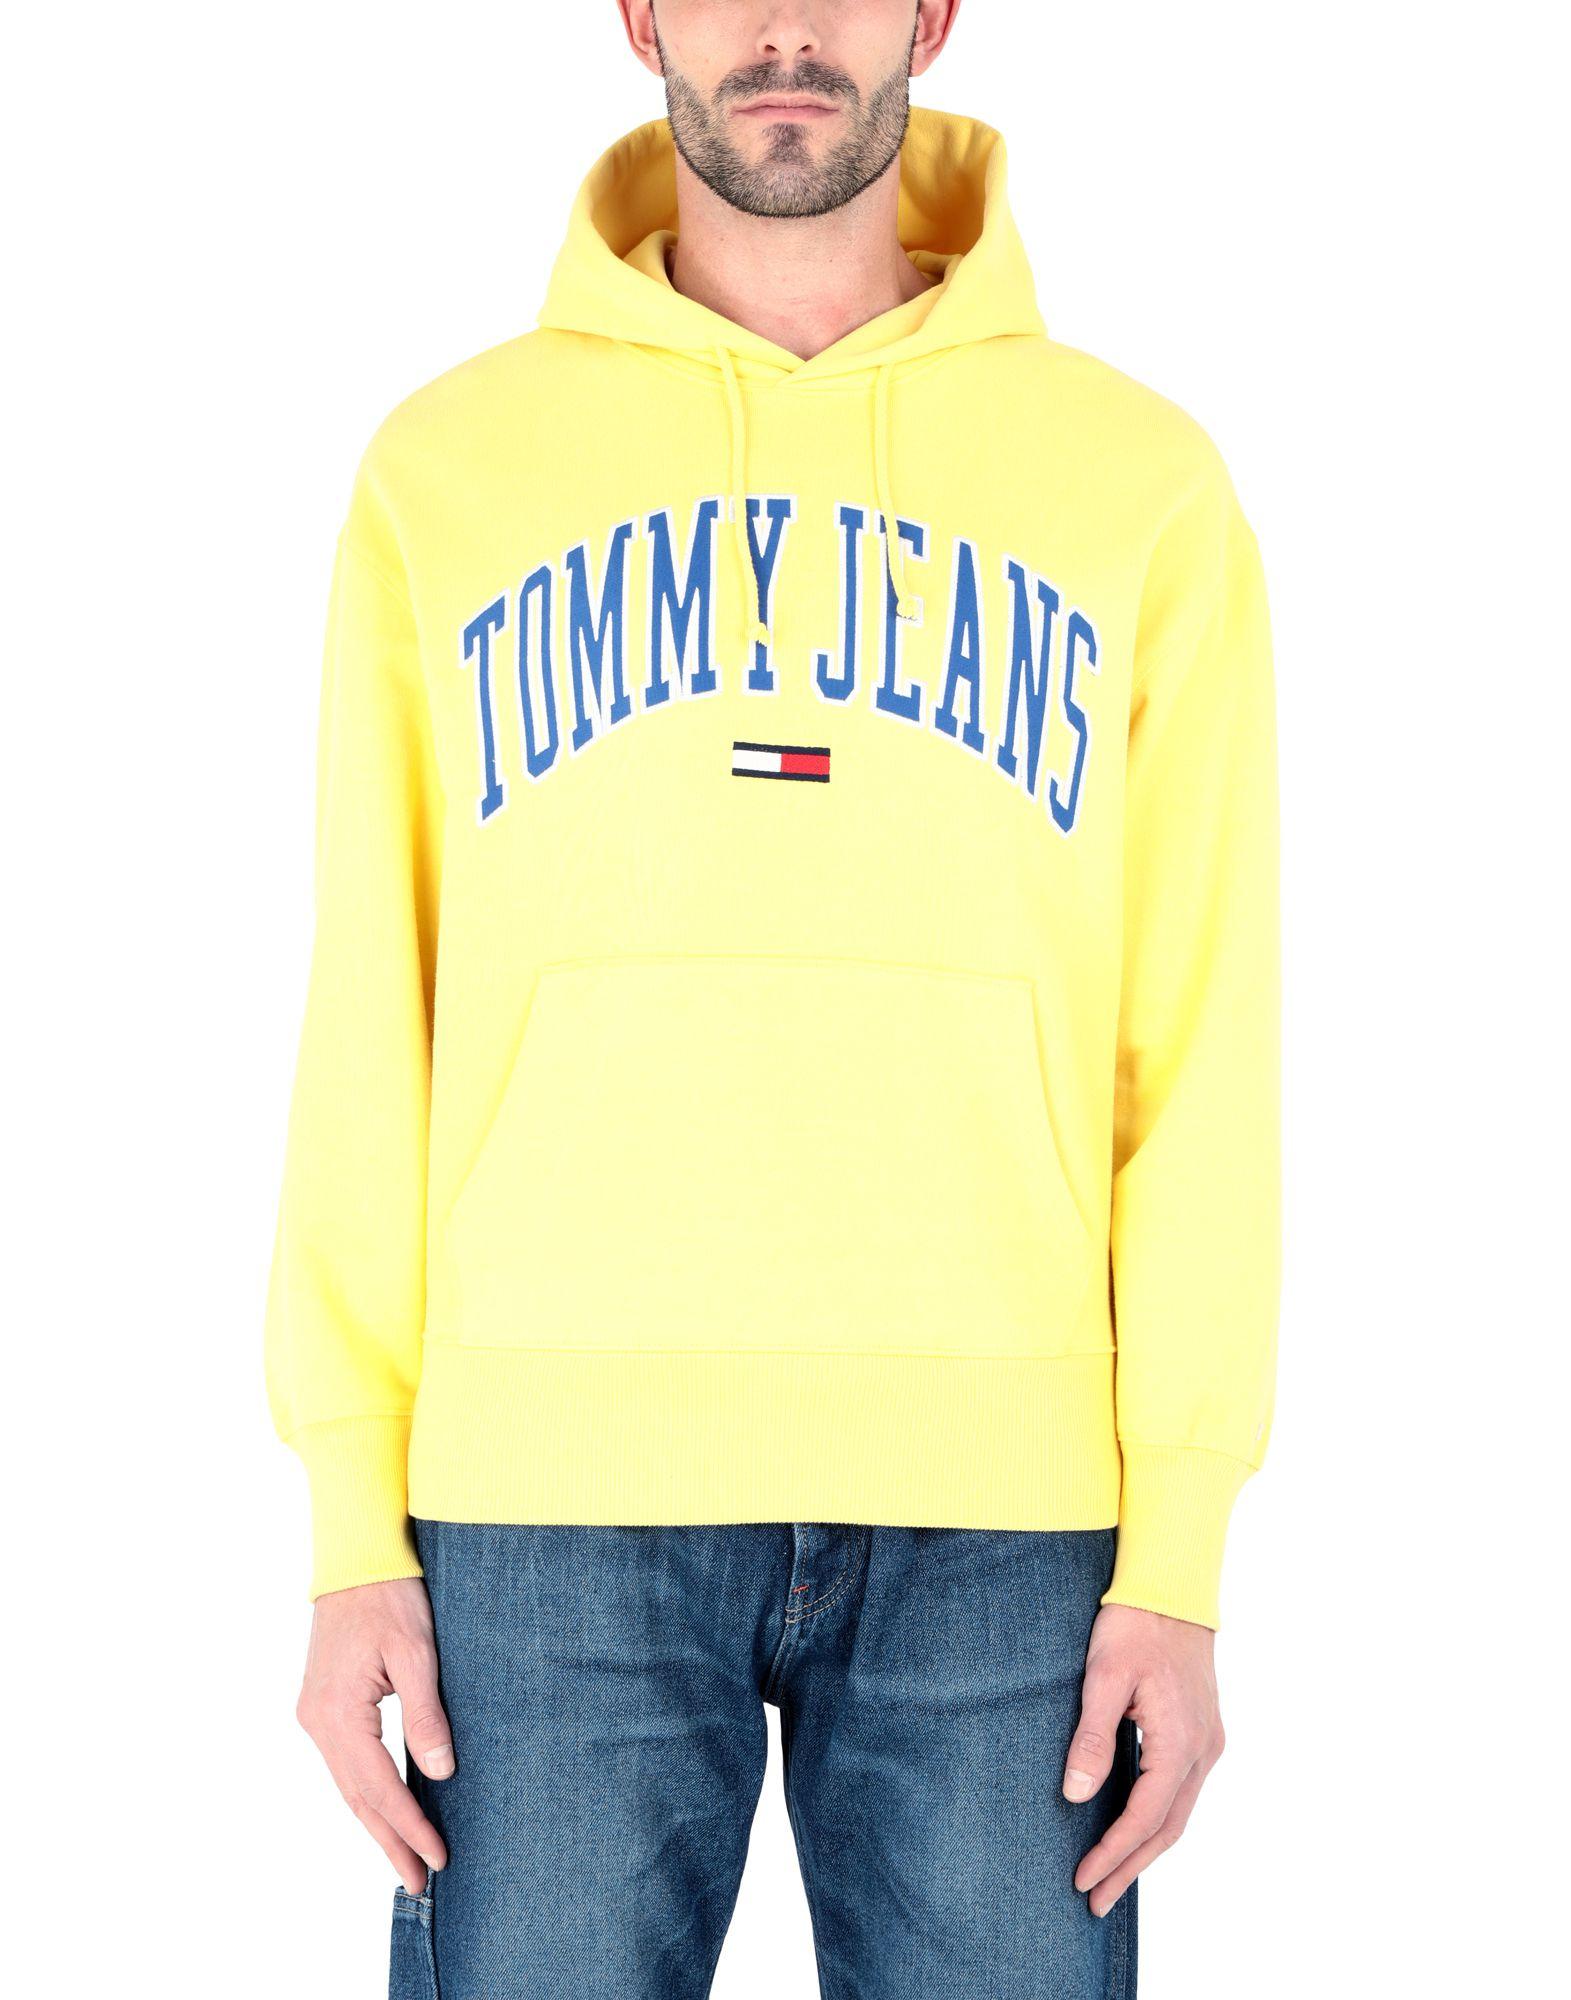 Tommy Hilfiger Denim Logo Hooded Sweatshirt in Yellow for Men - Lyst